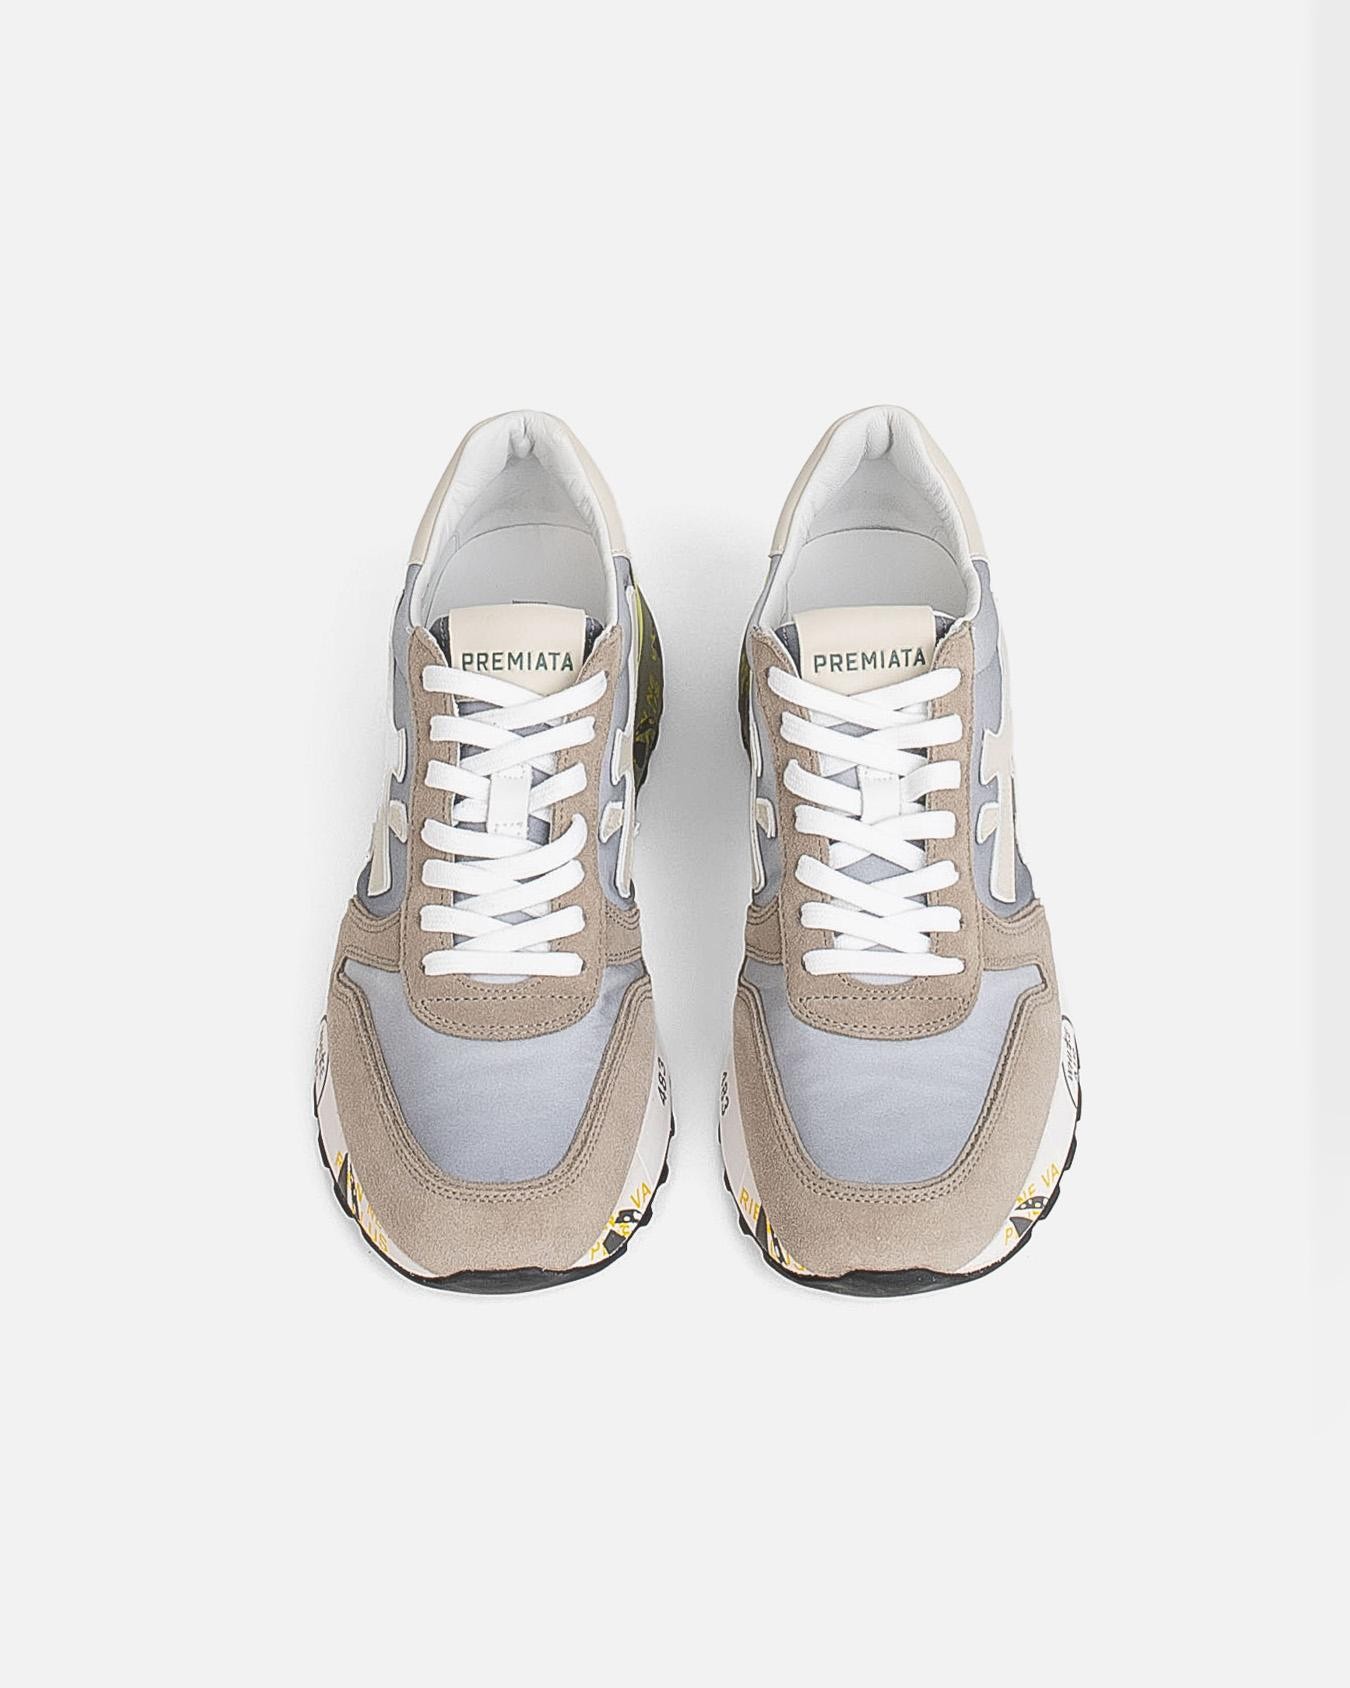 premiata-zapatillas-mick-var-5691-sneakers-grey-grises-6